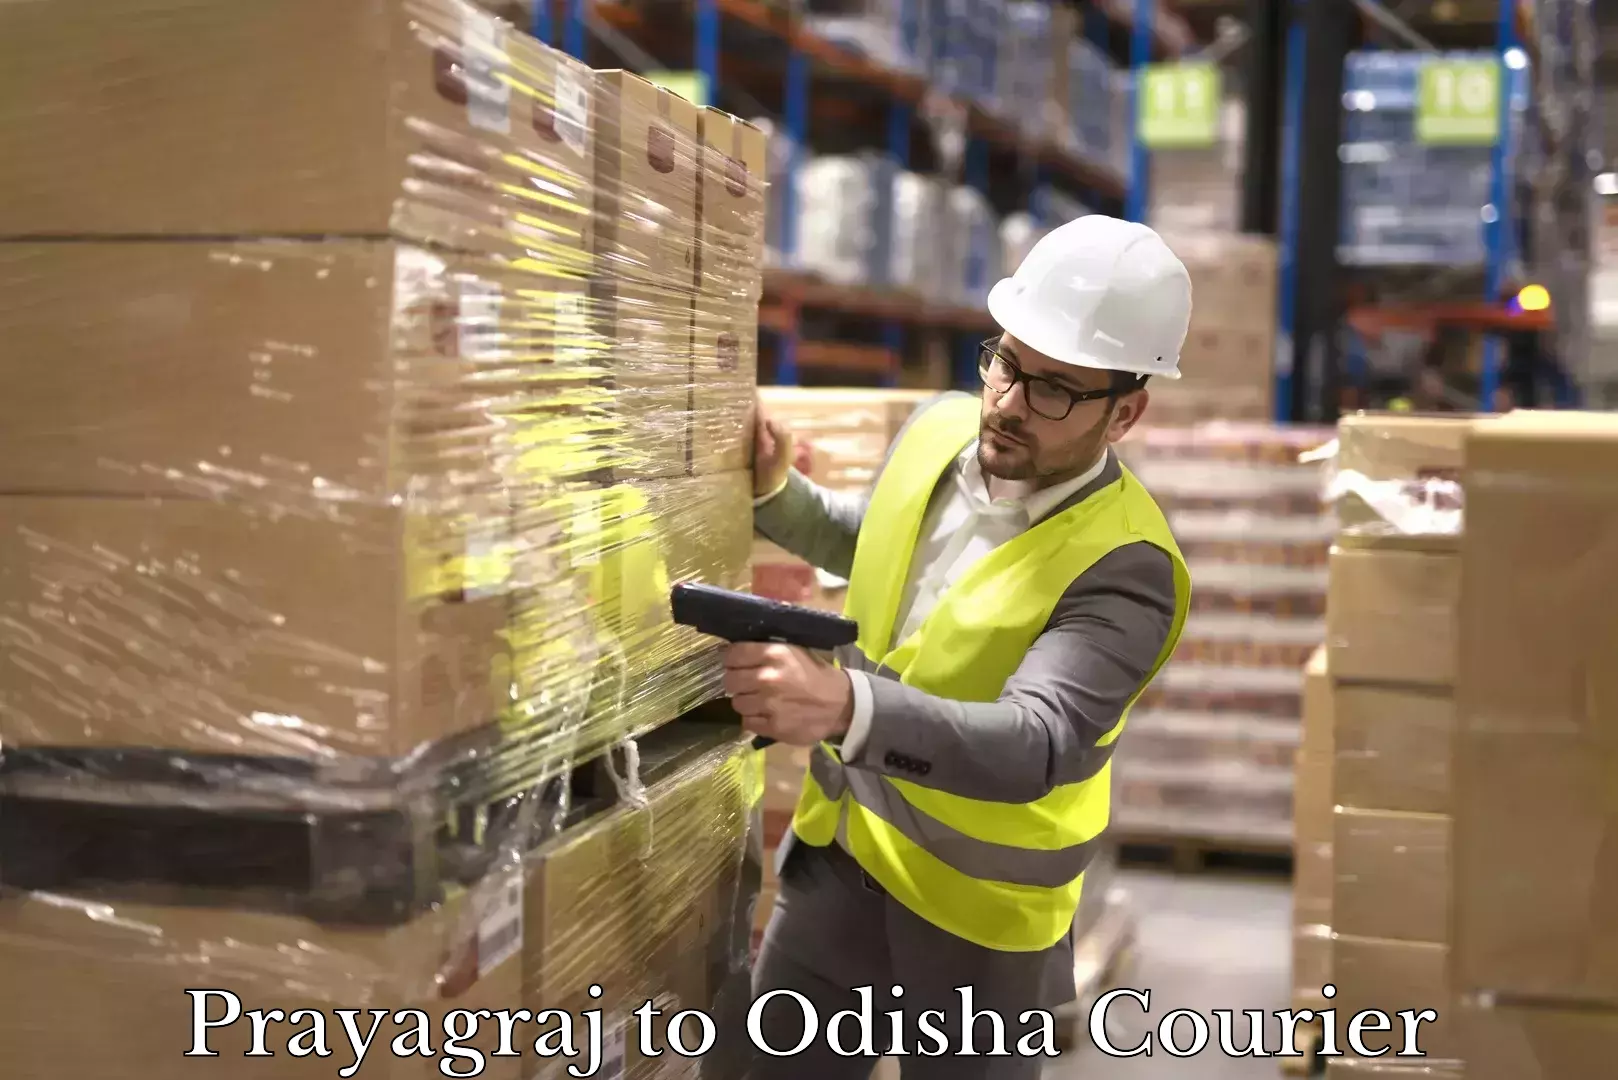 Delivery service partnership Prayagraj to Odisha